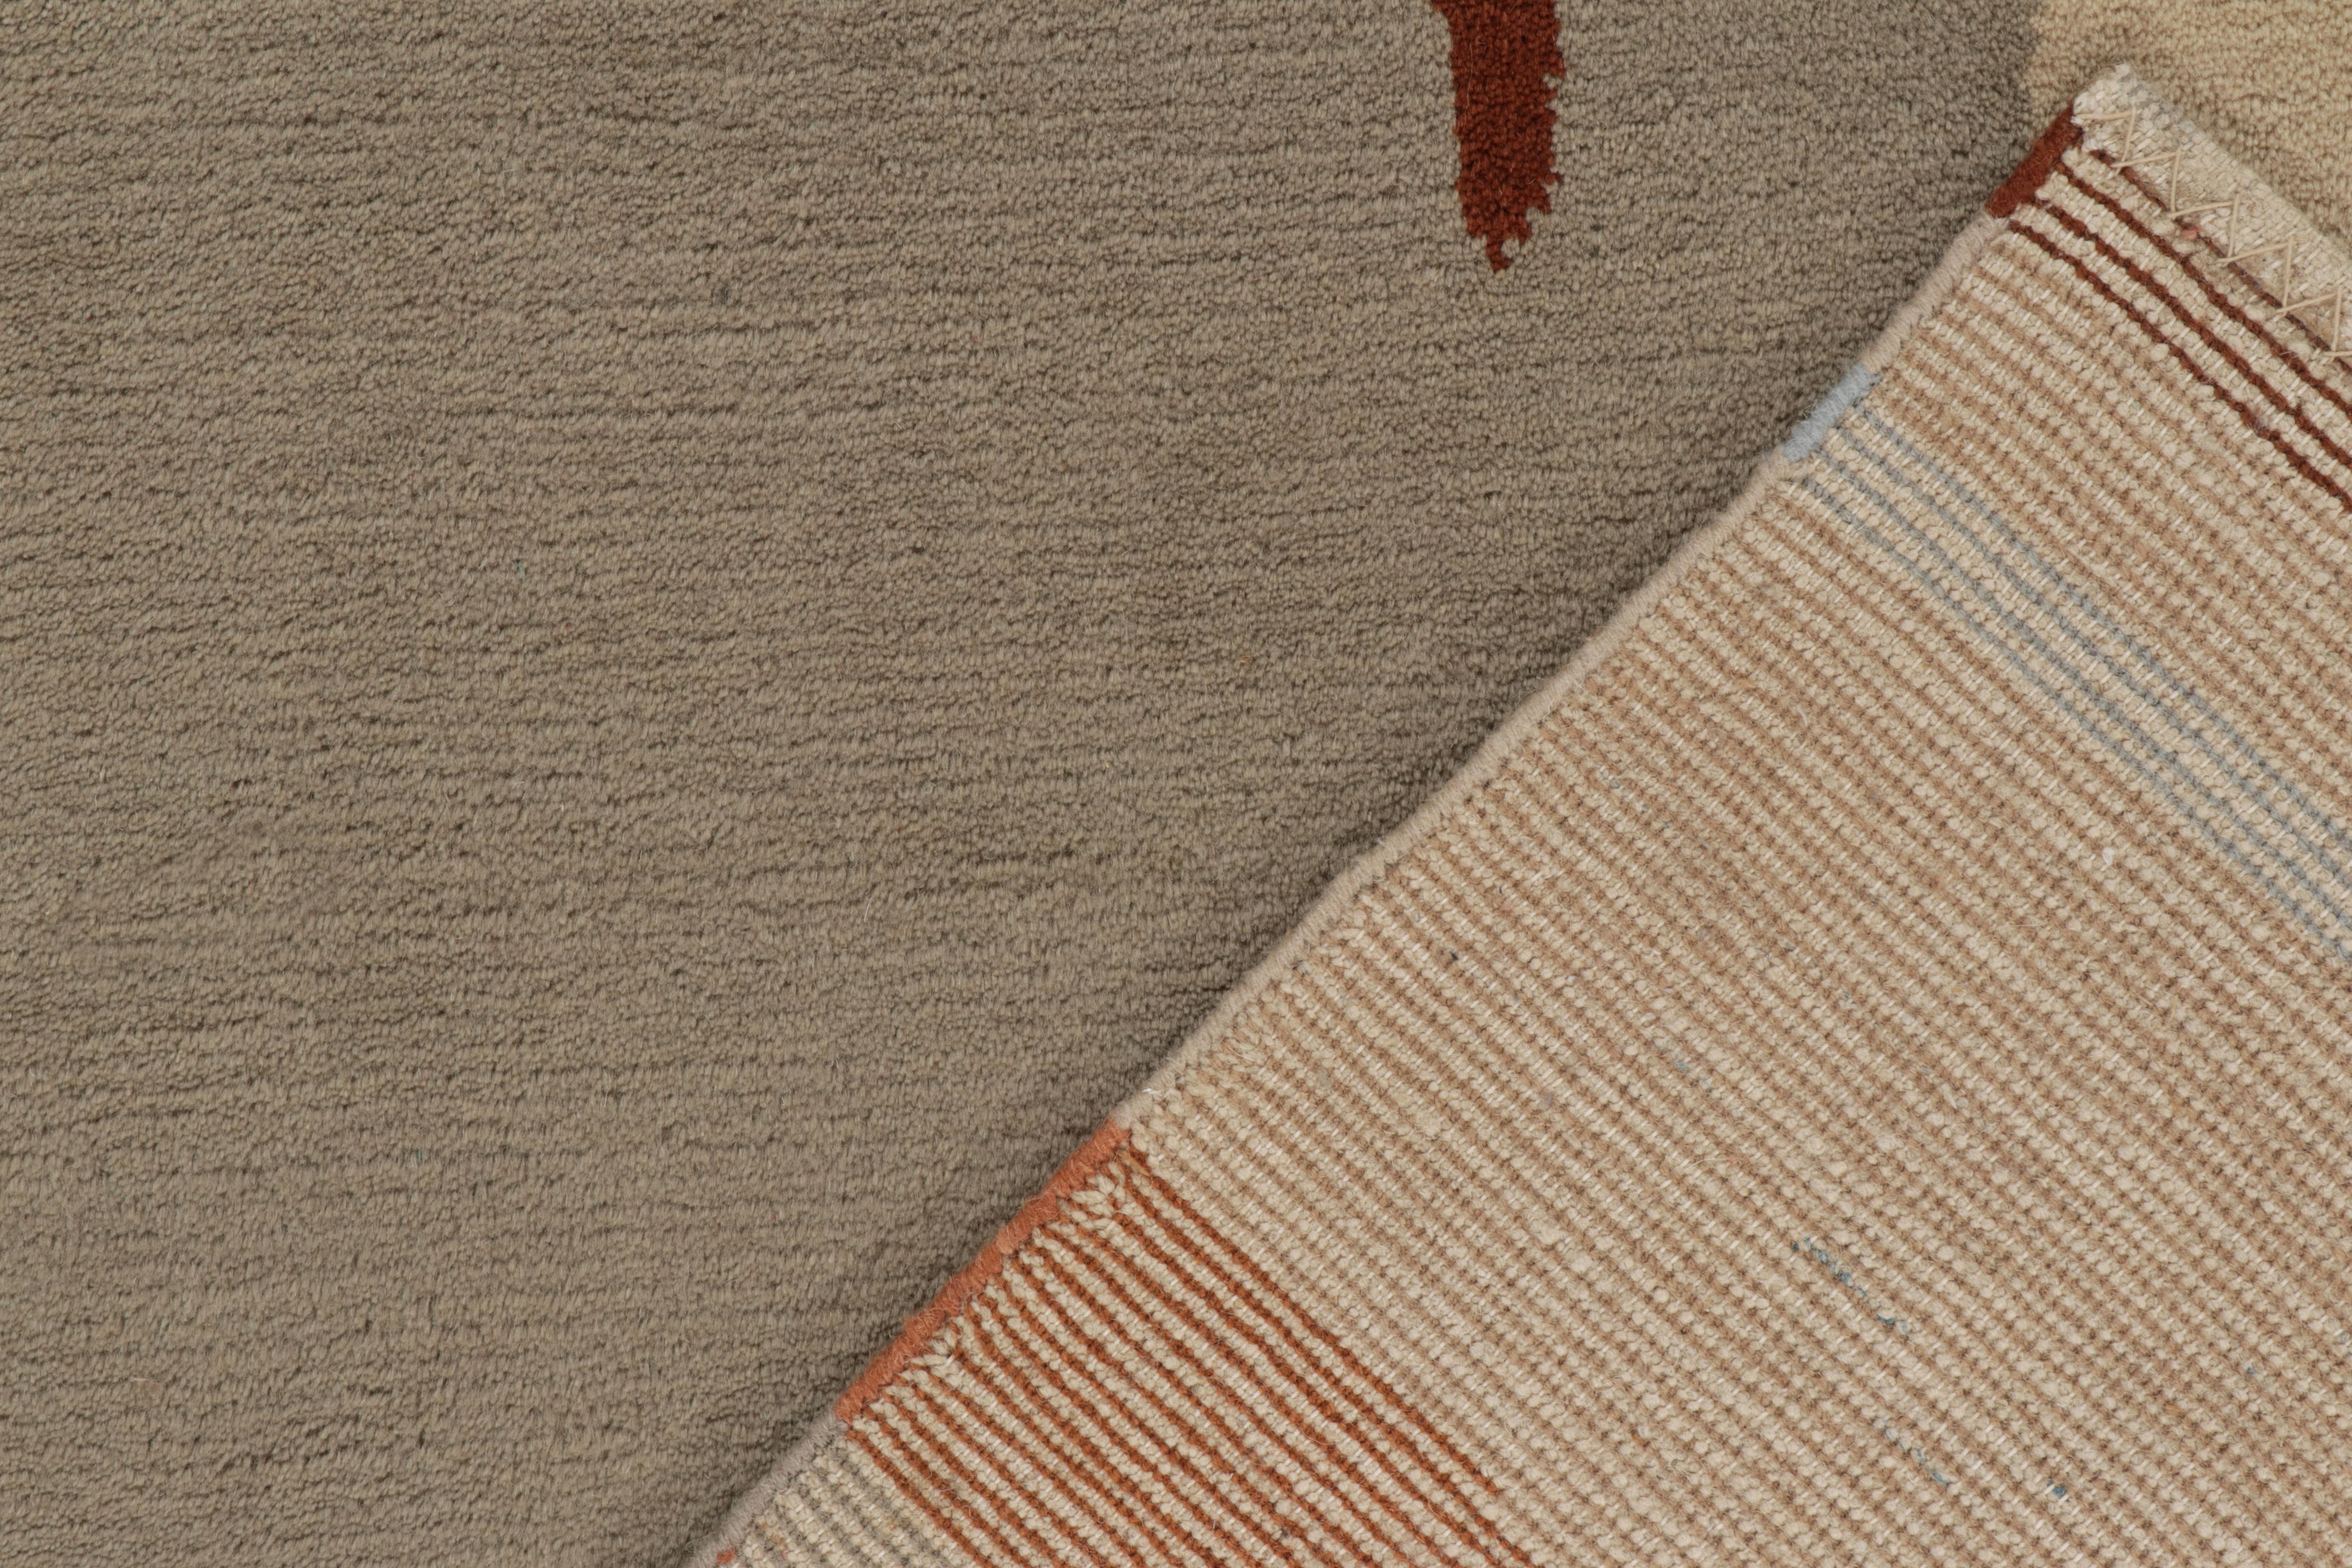 Wool Rug & Kilim’s Art Deco Style Rug in Gray, Orange & Beige Geometric Patterns For Sale